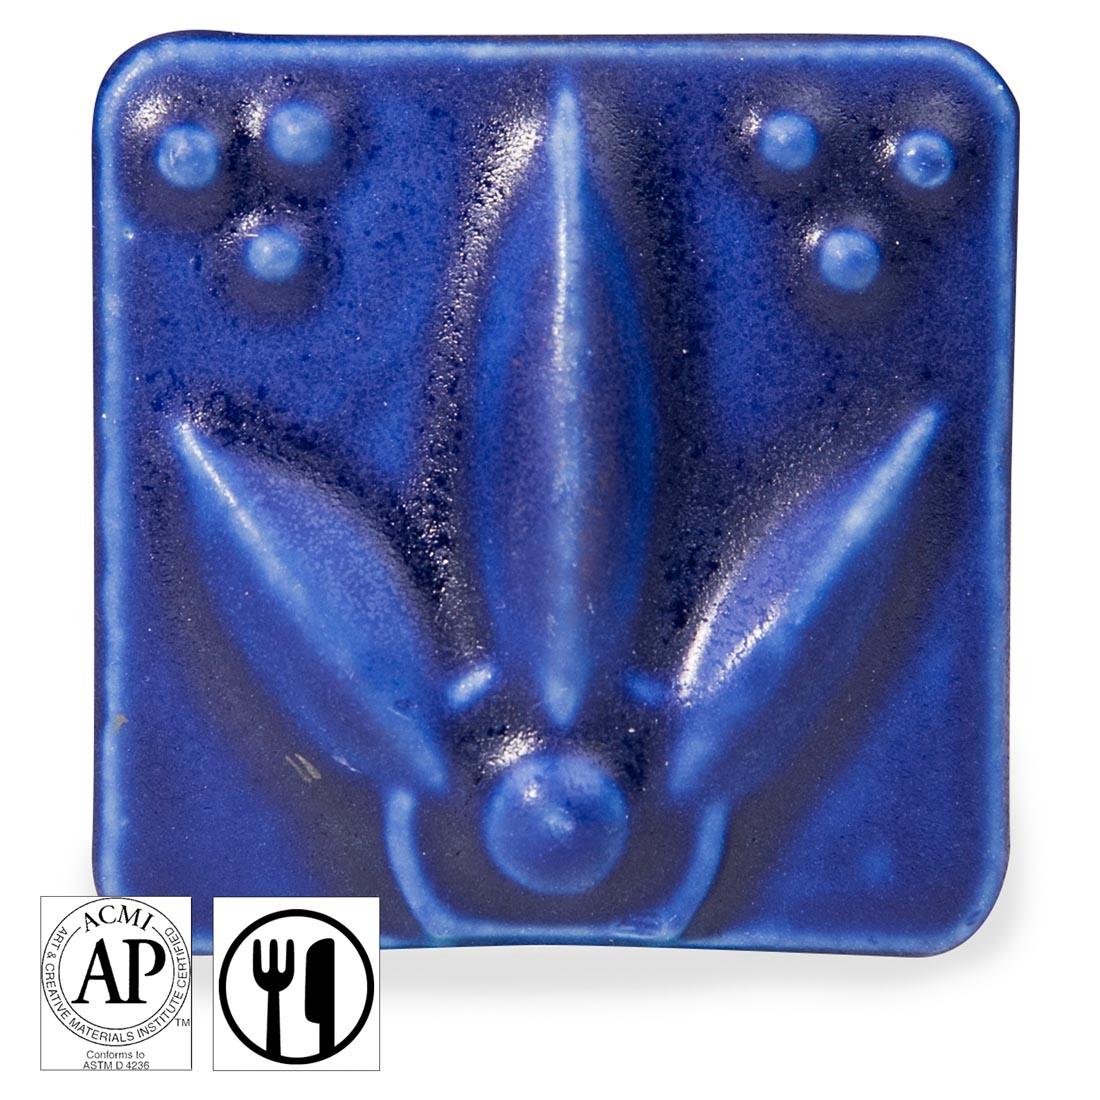 clay tile with Dark Blue AMACO Satin Matte Glaze applied; symbols for AP Seal and food safe